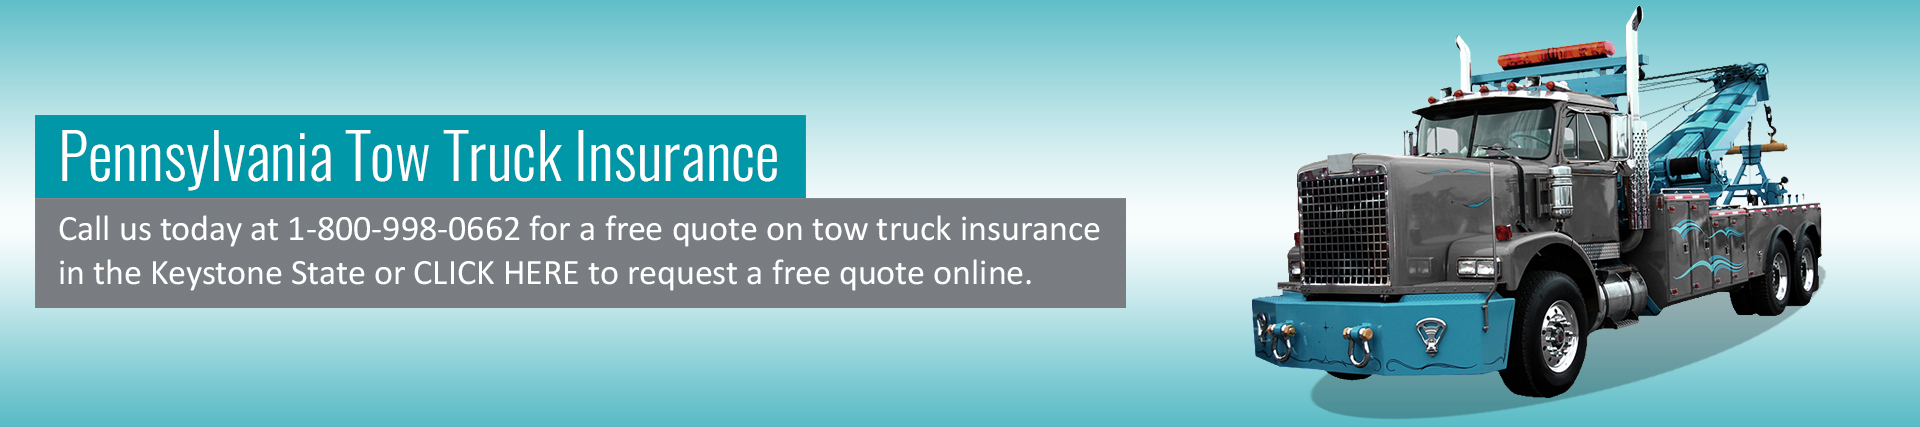 Pennsylvania Tow Truck Insurance